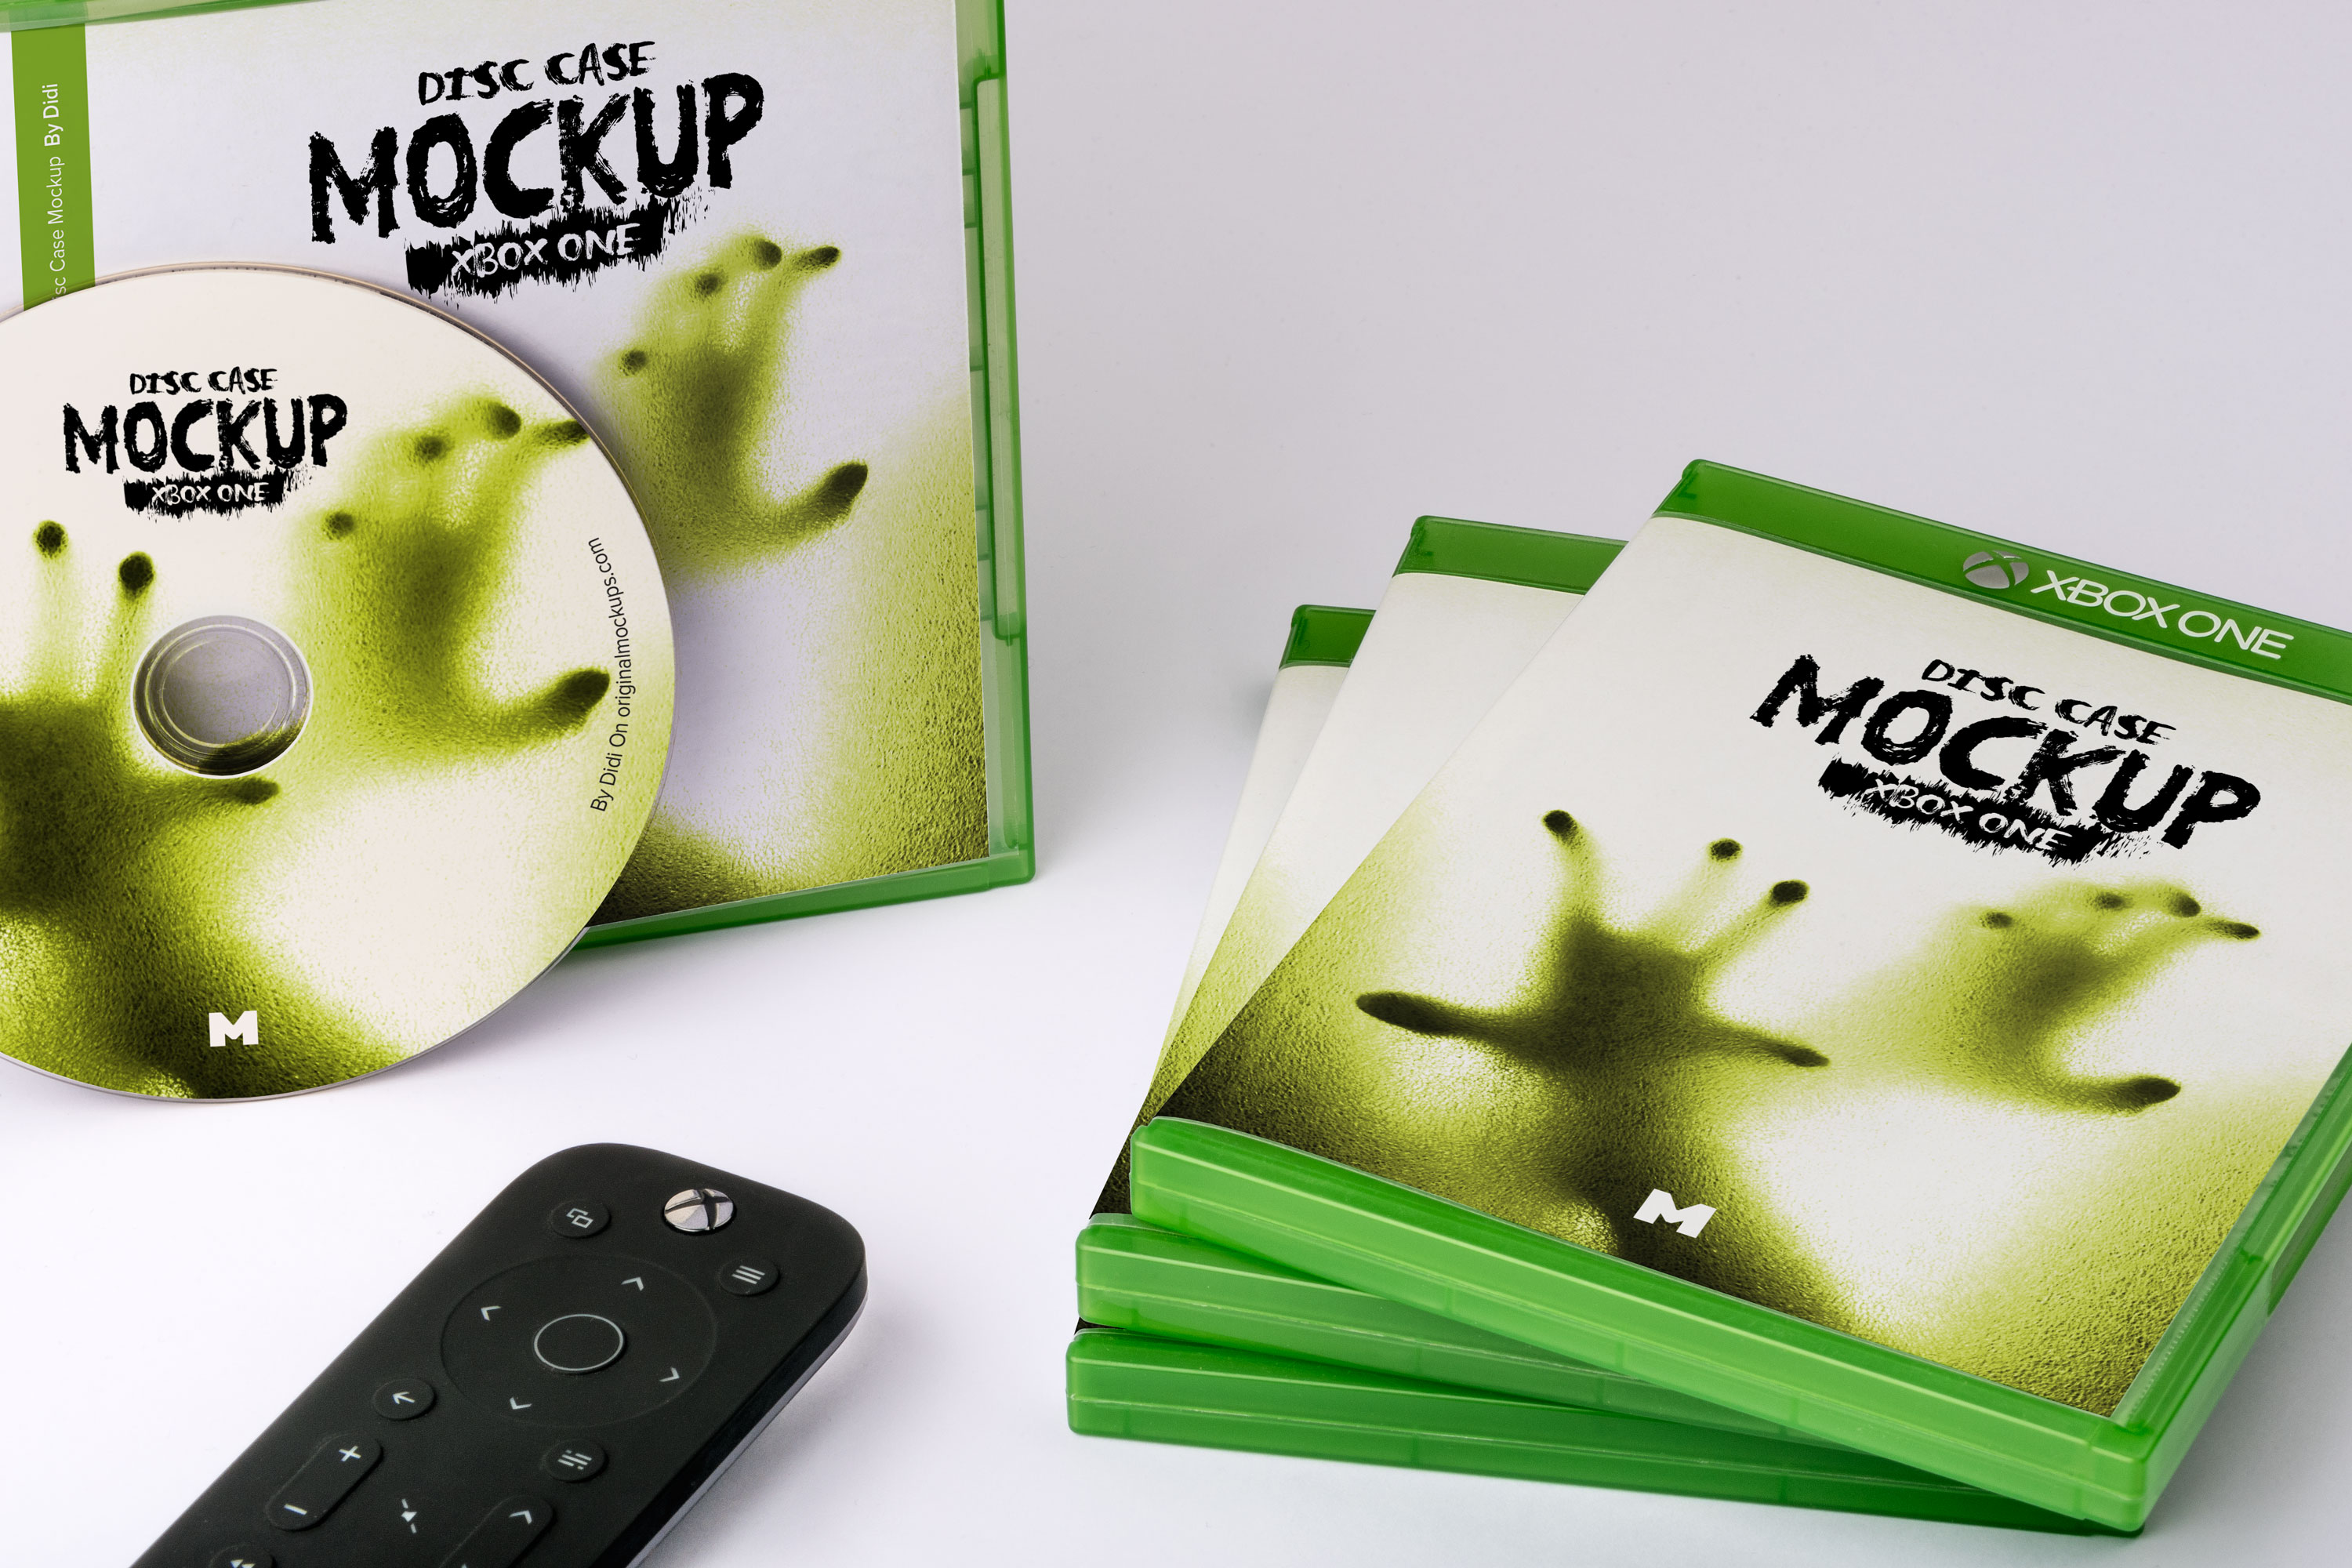 Xbox One游戏光盘封面＆包装设计效果图样机 Xbox One Disc Case Mockup插图